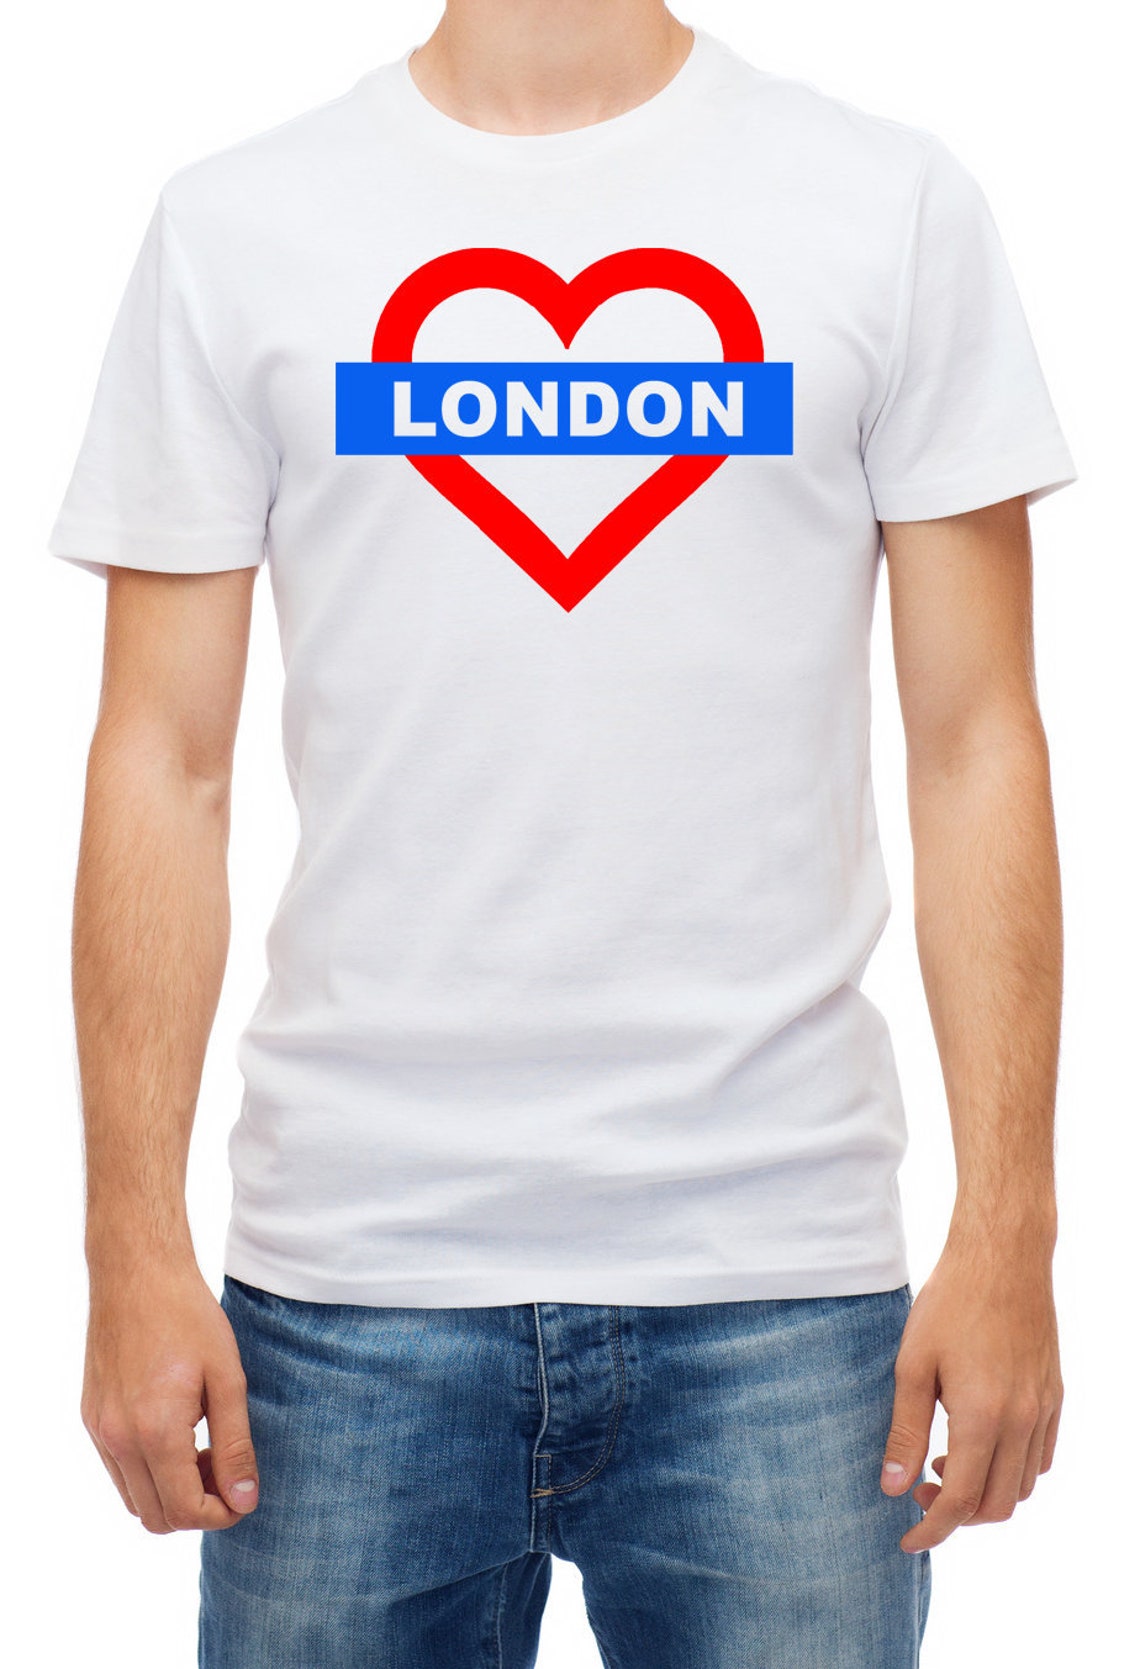 I love London London England Logo gift souvenirShort Sleeve | Etsy